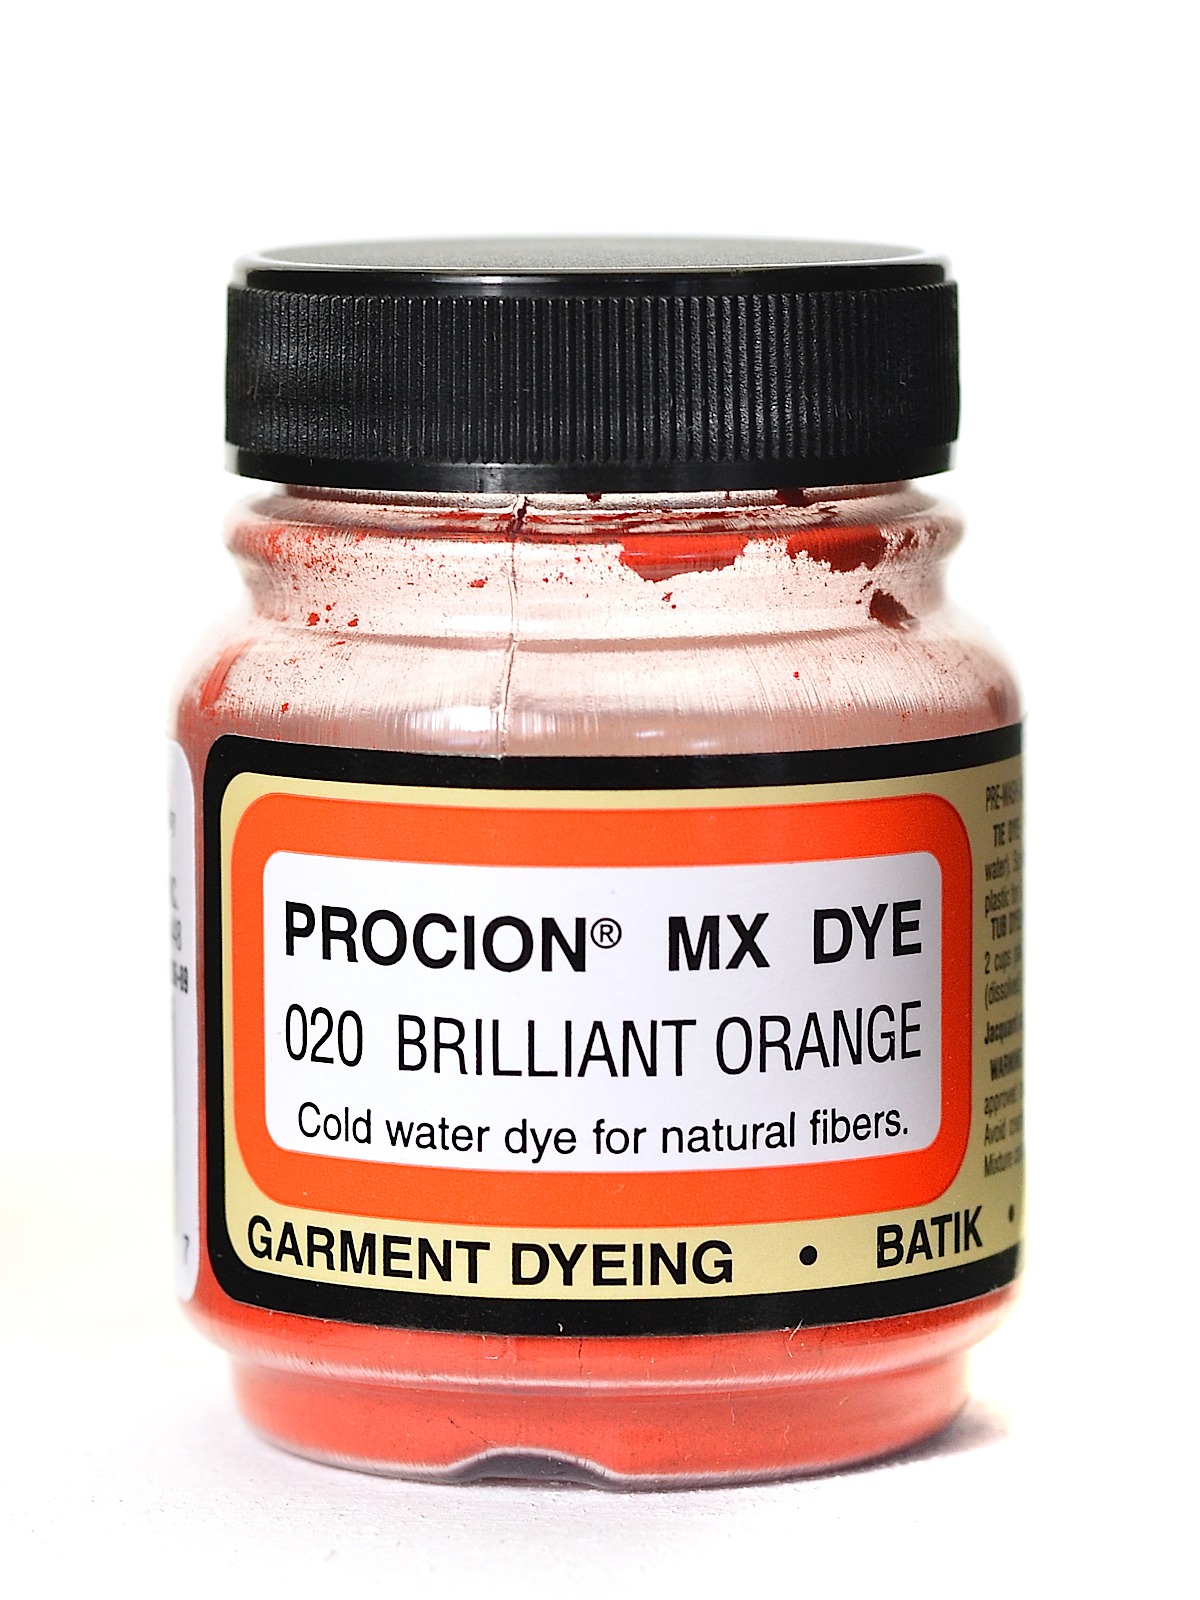 Jacquard Procion MX dye 2020 brilliant orange